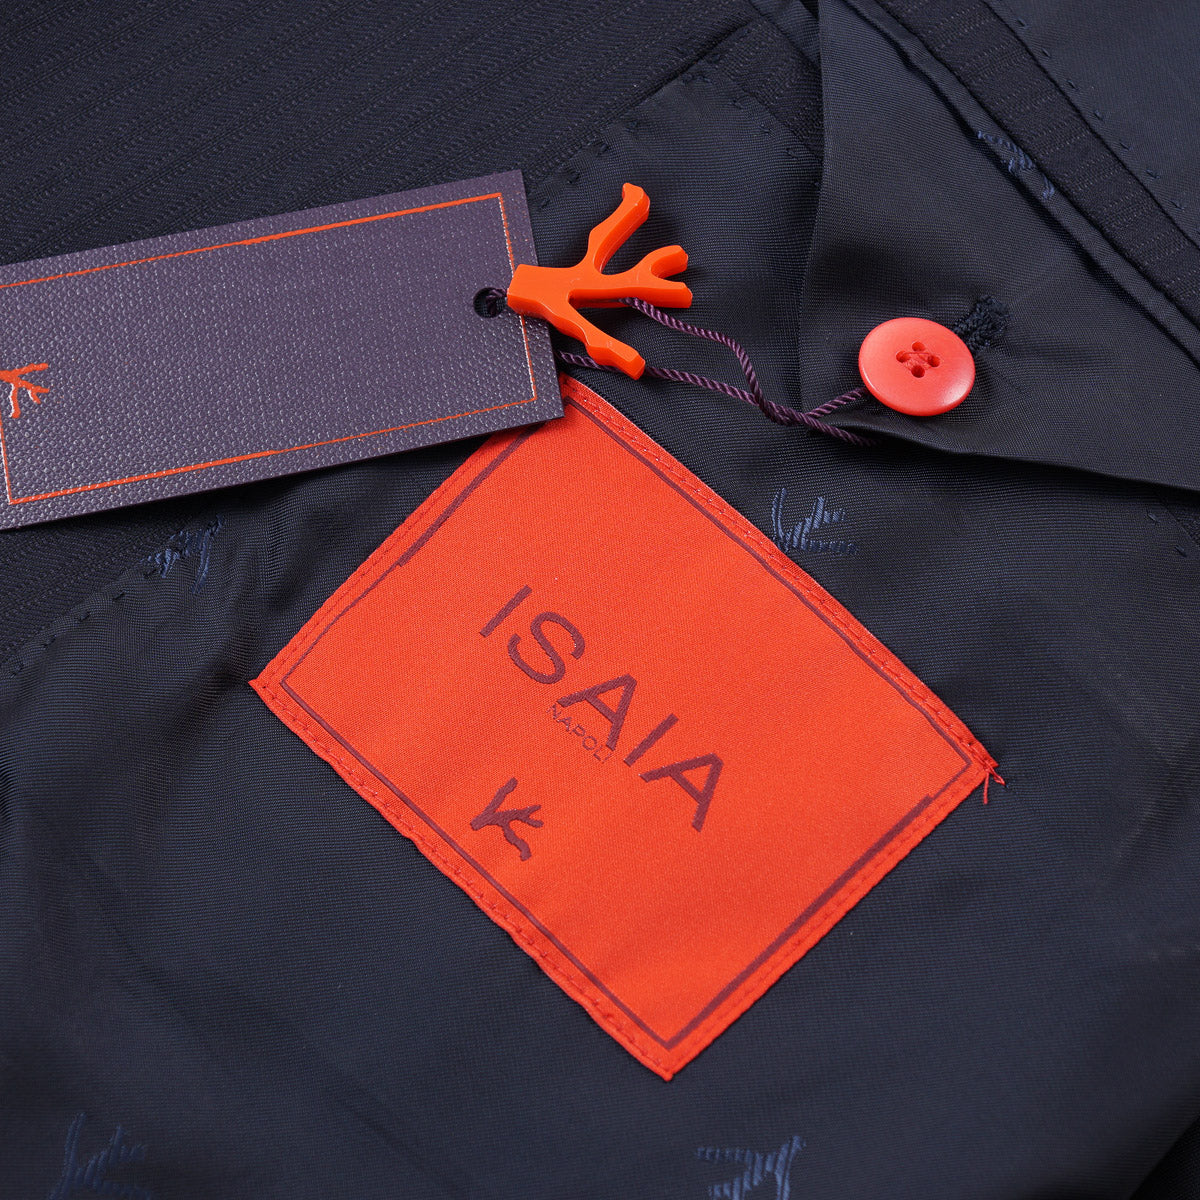 Isaia Slim-Fit Super 150s Wool Suit - Top Shelf Apparel